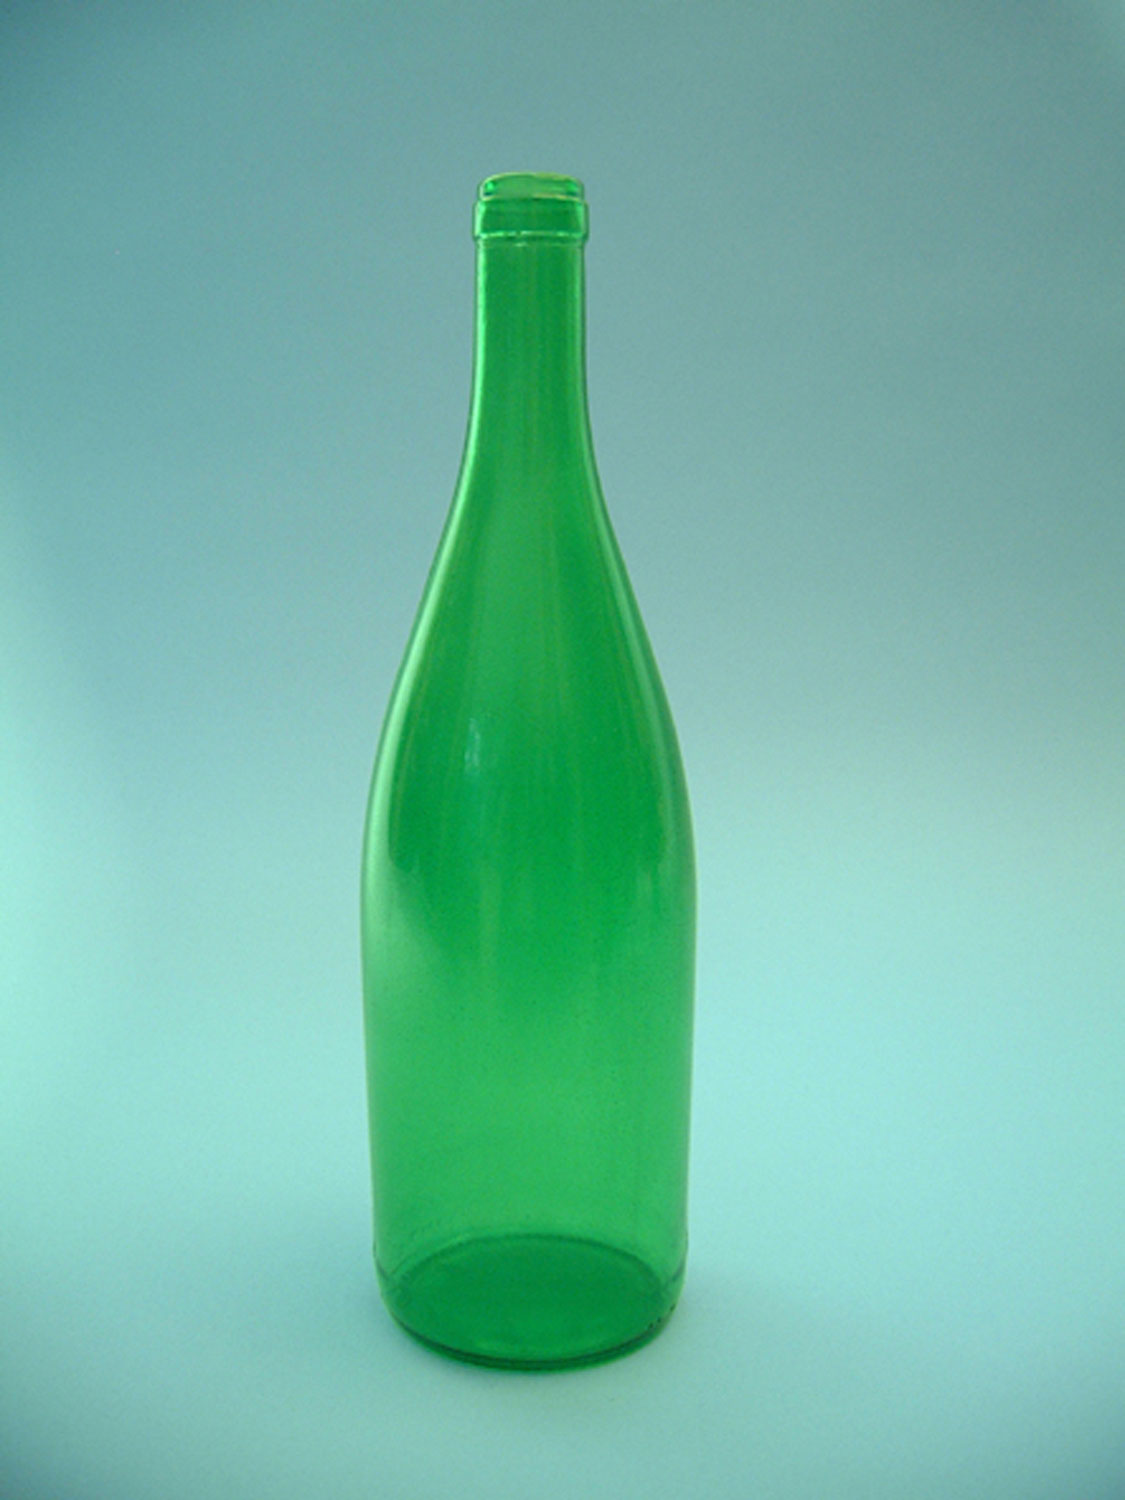 How To Make a Breakaway Glass Bottle Prop